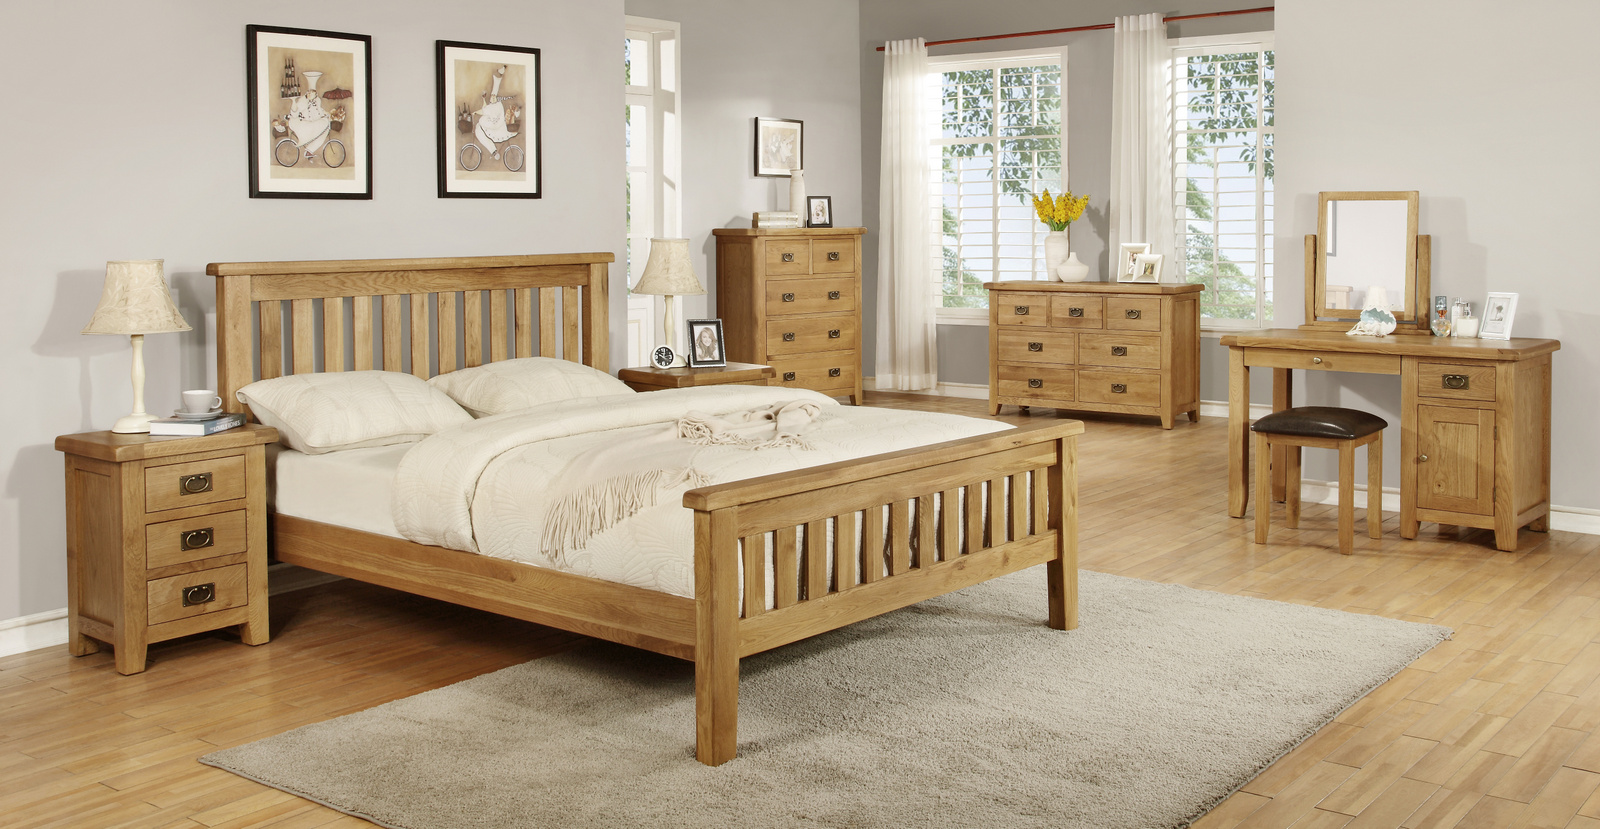 broyhill oak bedroom furniture MJWTURP